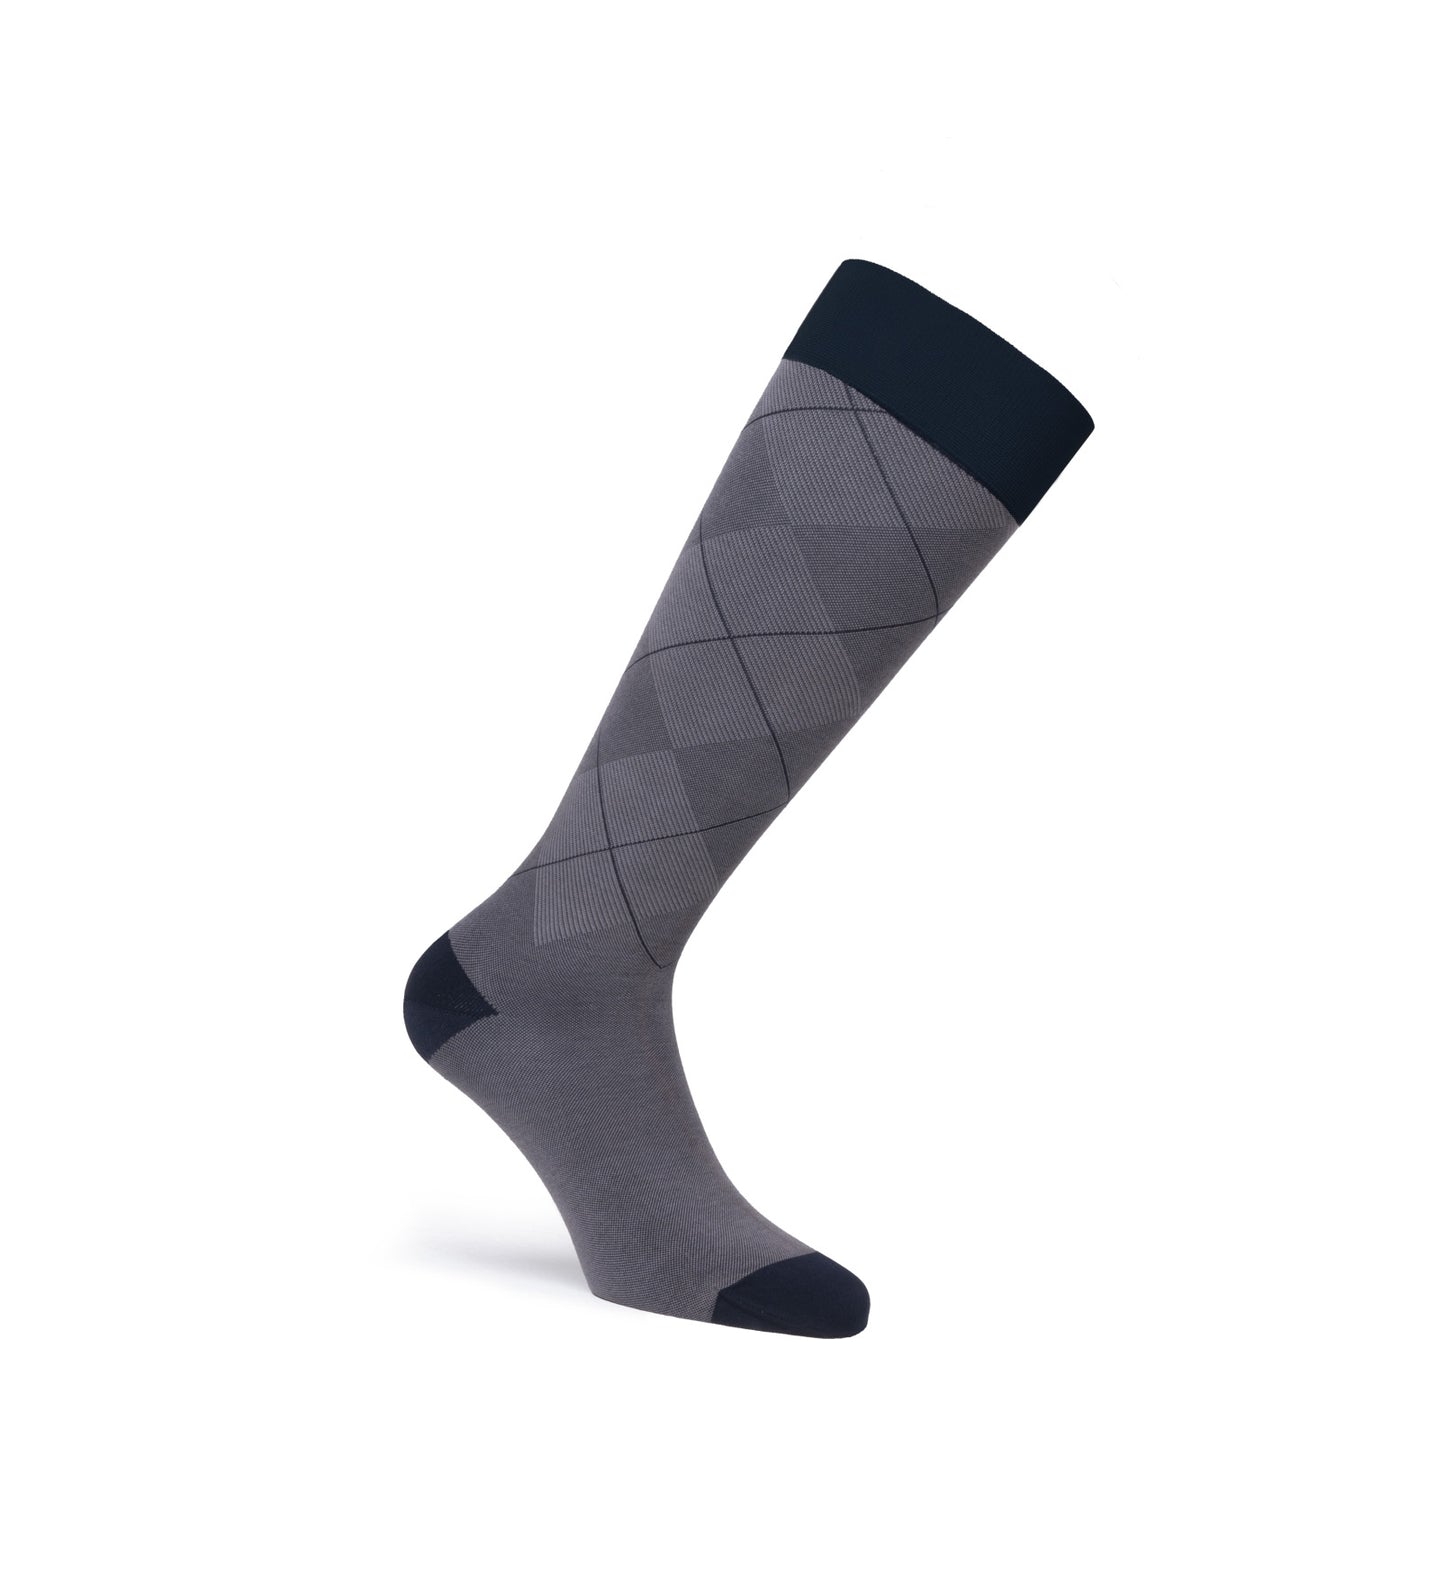 JOBST Casual Pattern Compression Socks 15-20 mmHg Knee High Closed Toe